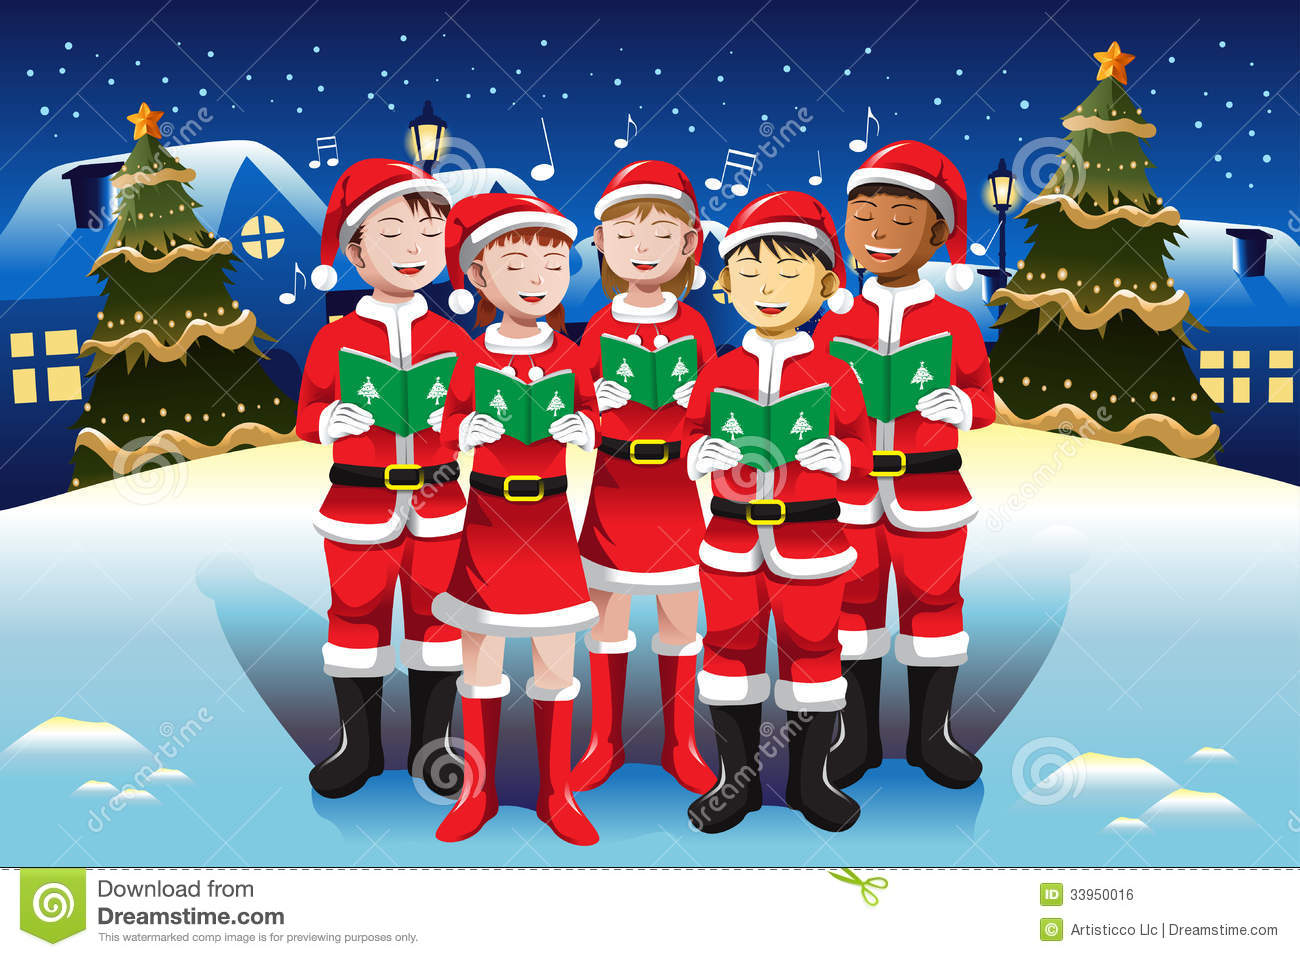 Children Singing In Christmas Choir Royalty Free Stock Image   Image